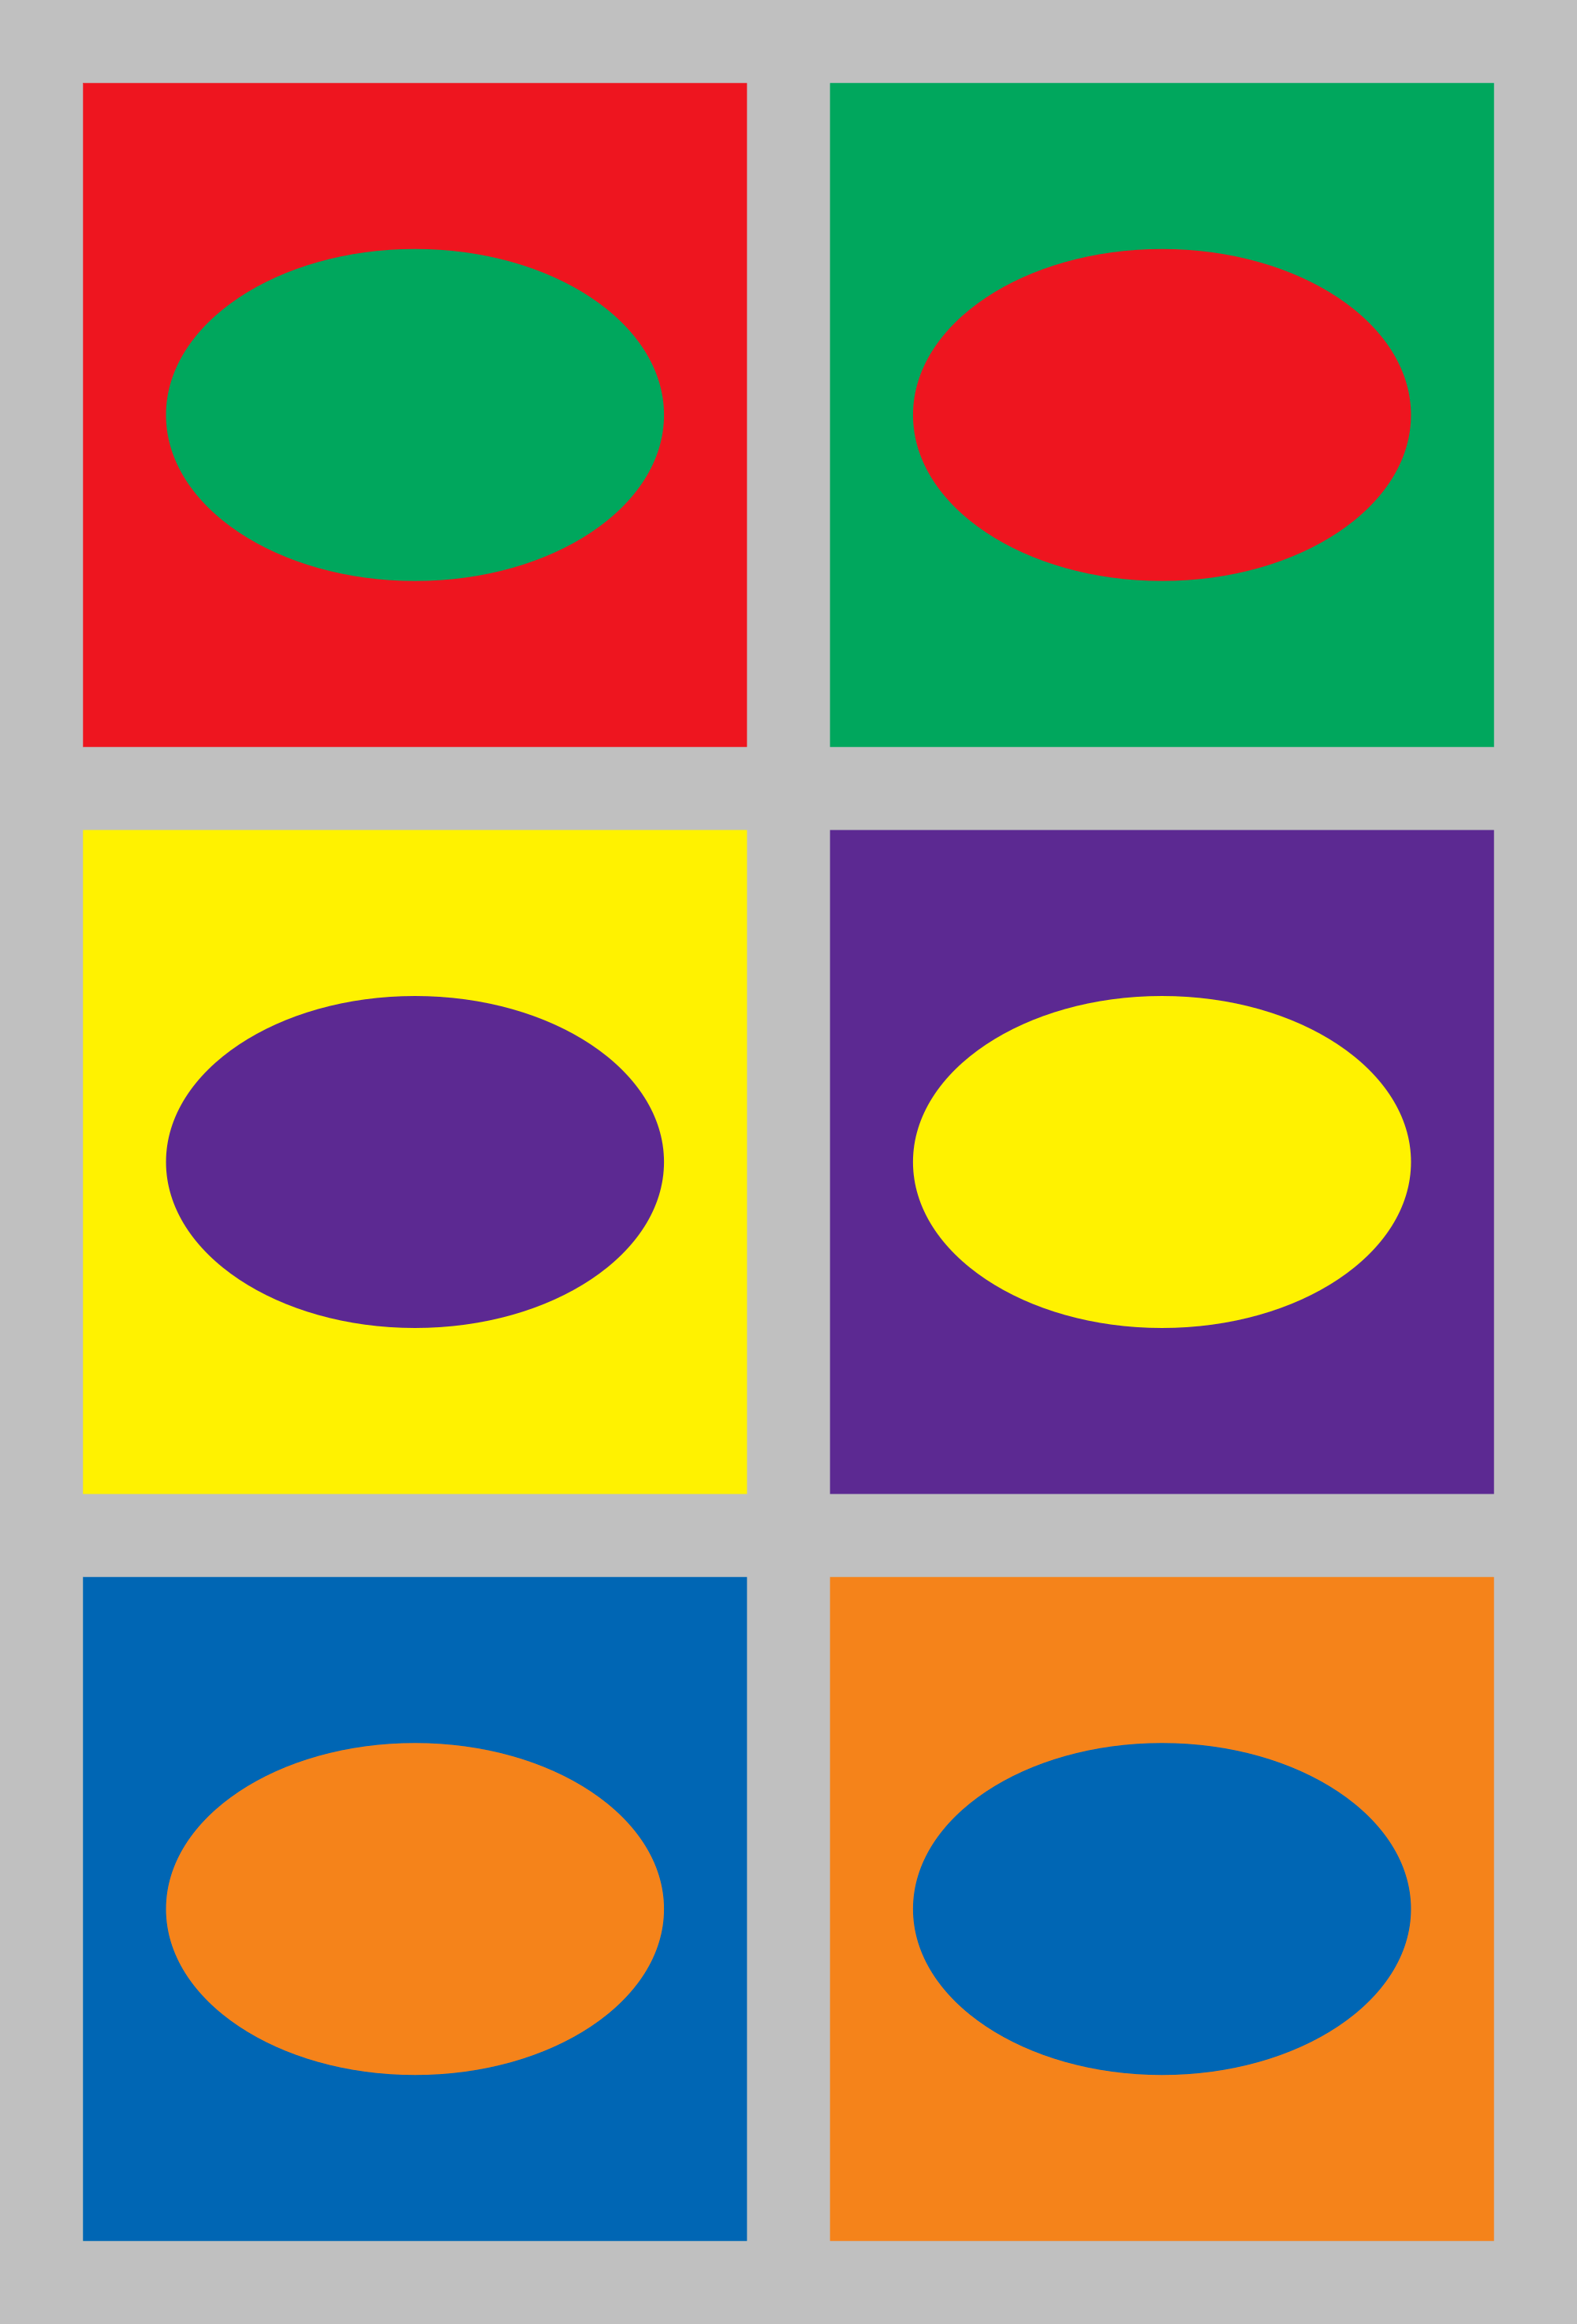 cr-2 sb-1-Color Theoryimg_no 2594.jpg